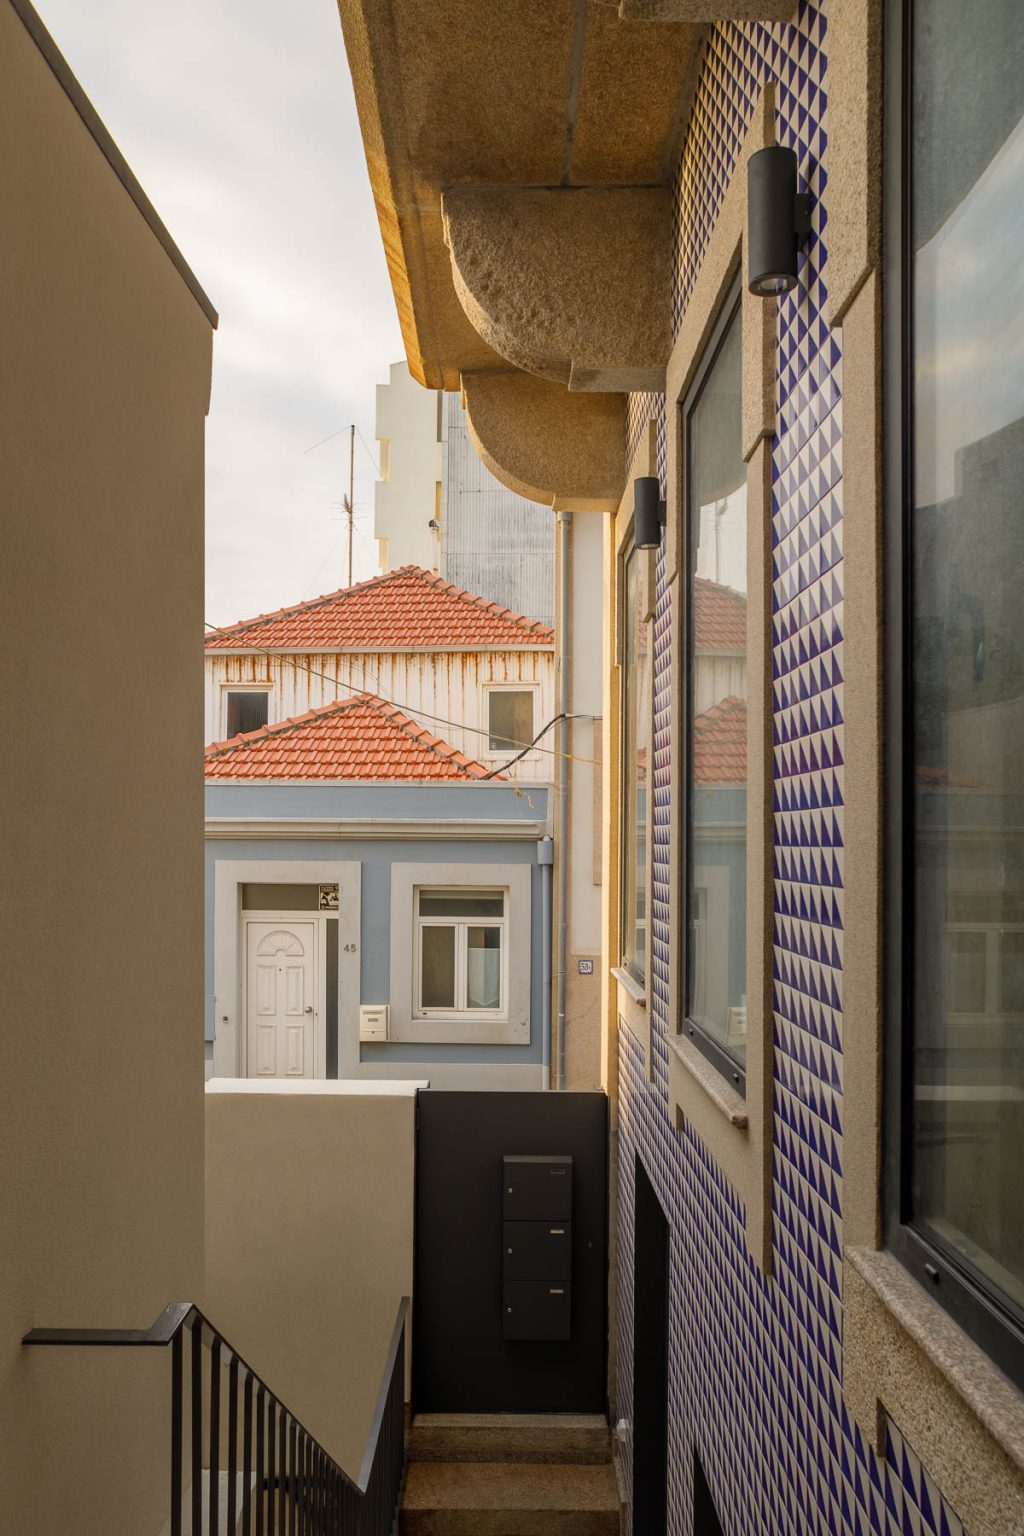 Prédio Foz στο Πόρτο - As Arquitecto